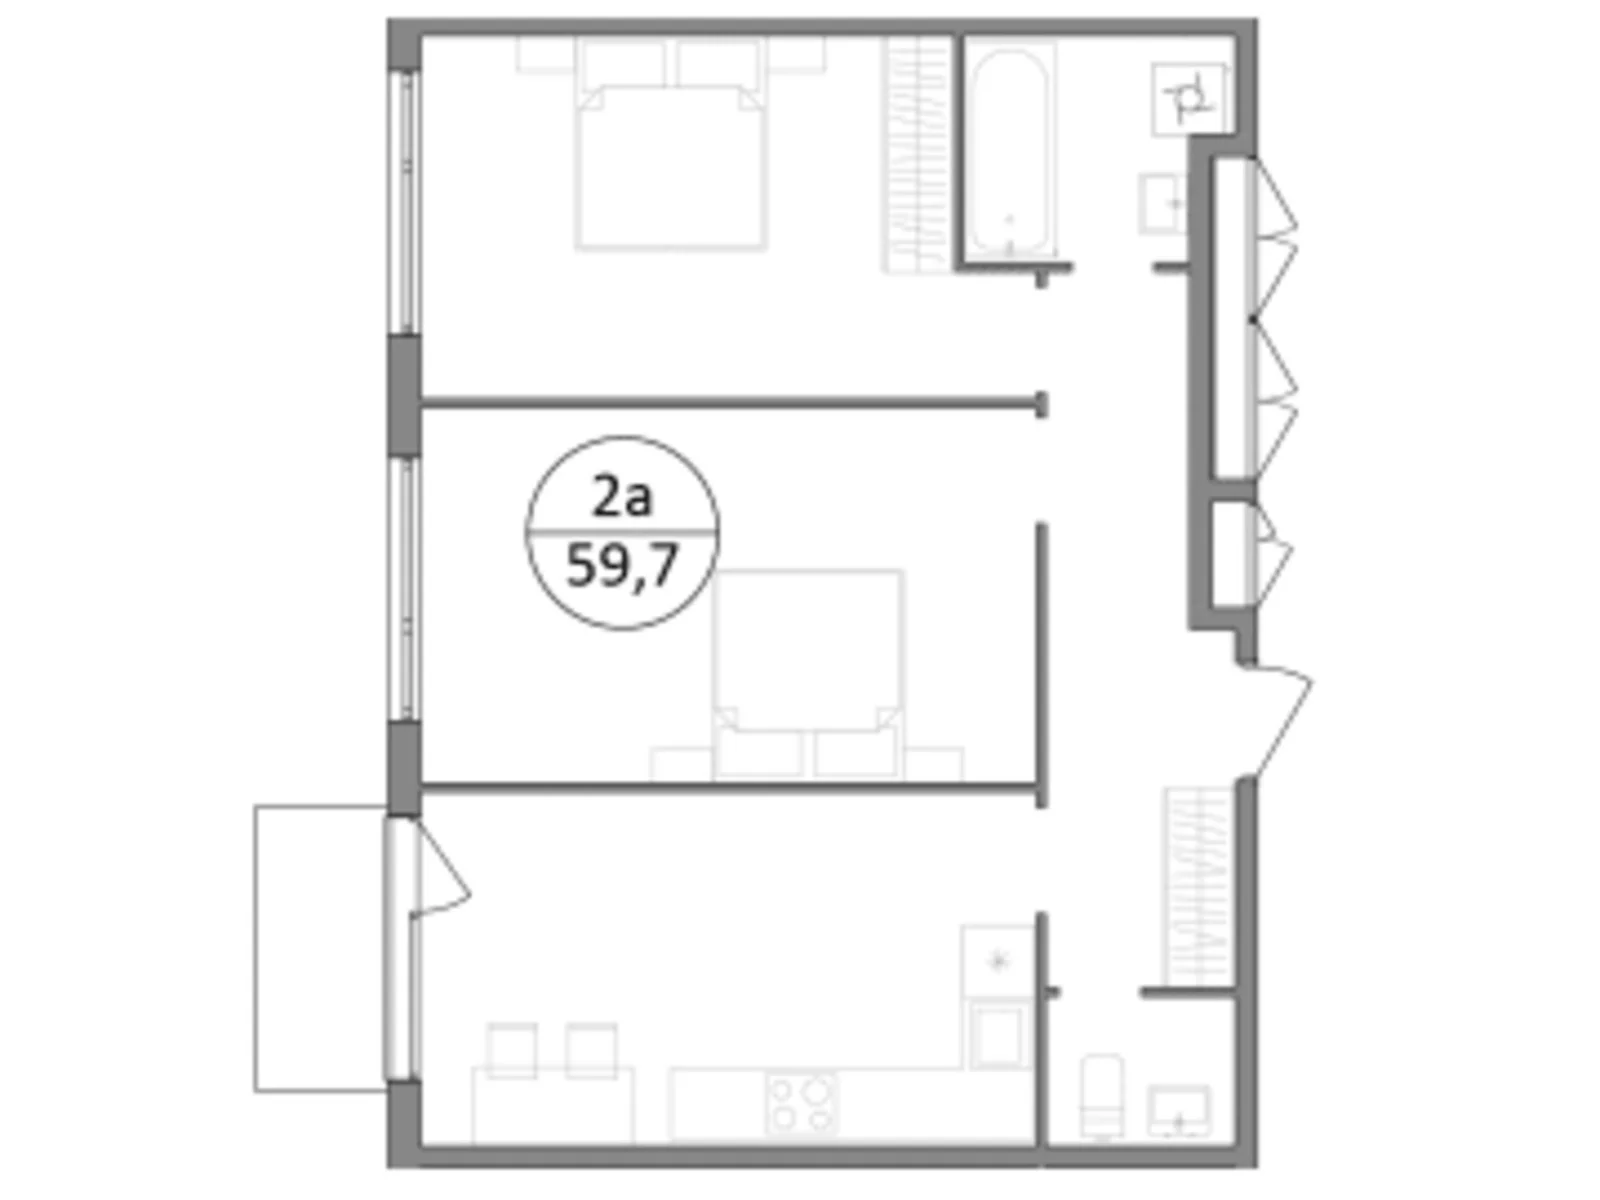 Продается 2-комнатная квартира 59.7 кв. м в Брюховичах, цена: 59520 $ - фото 1